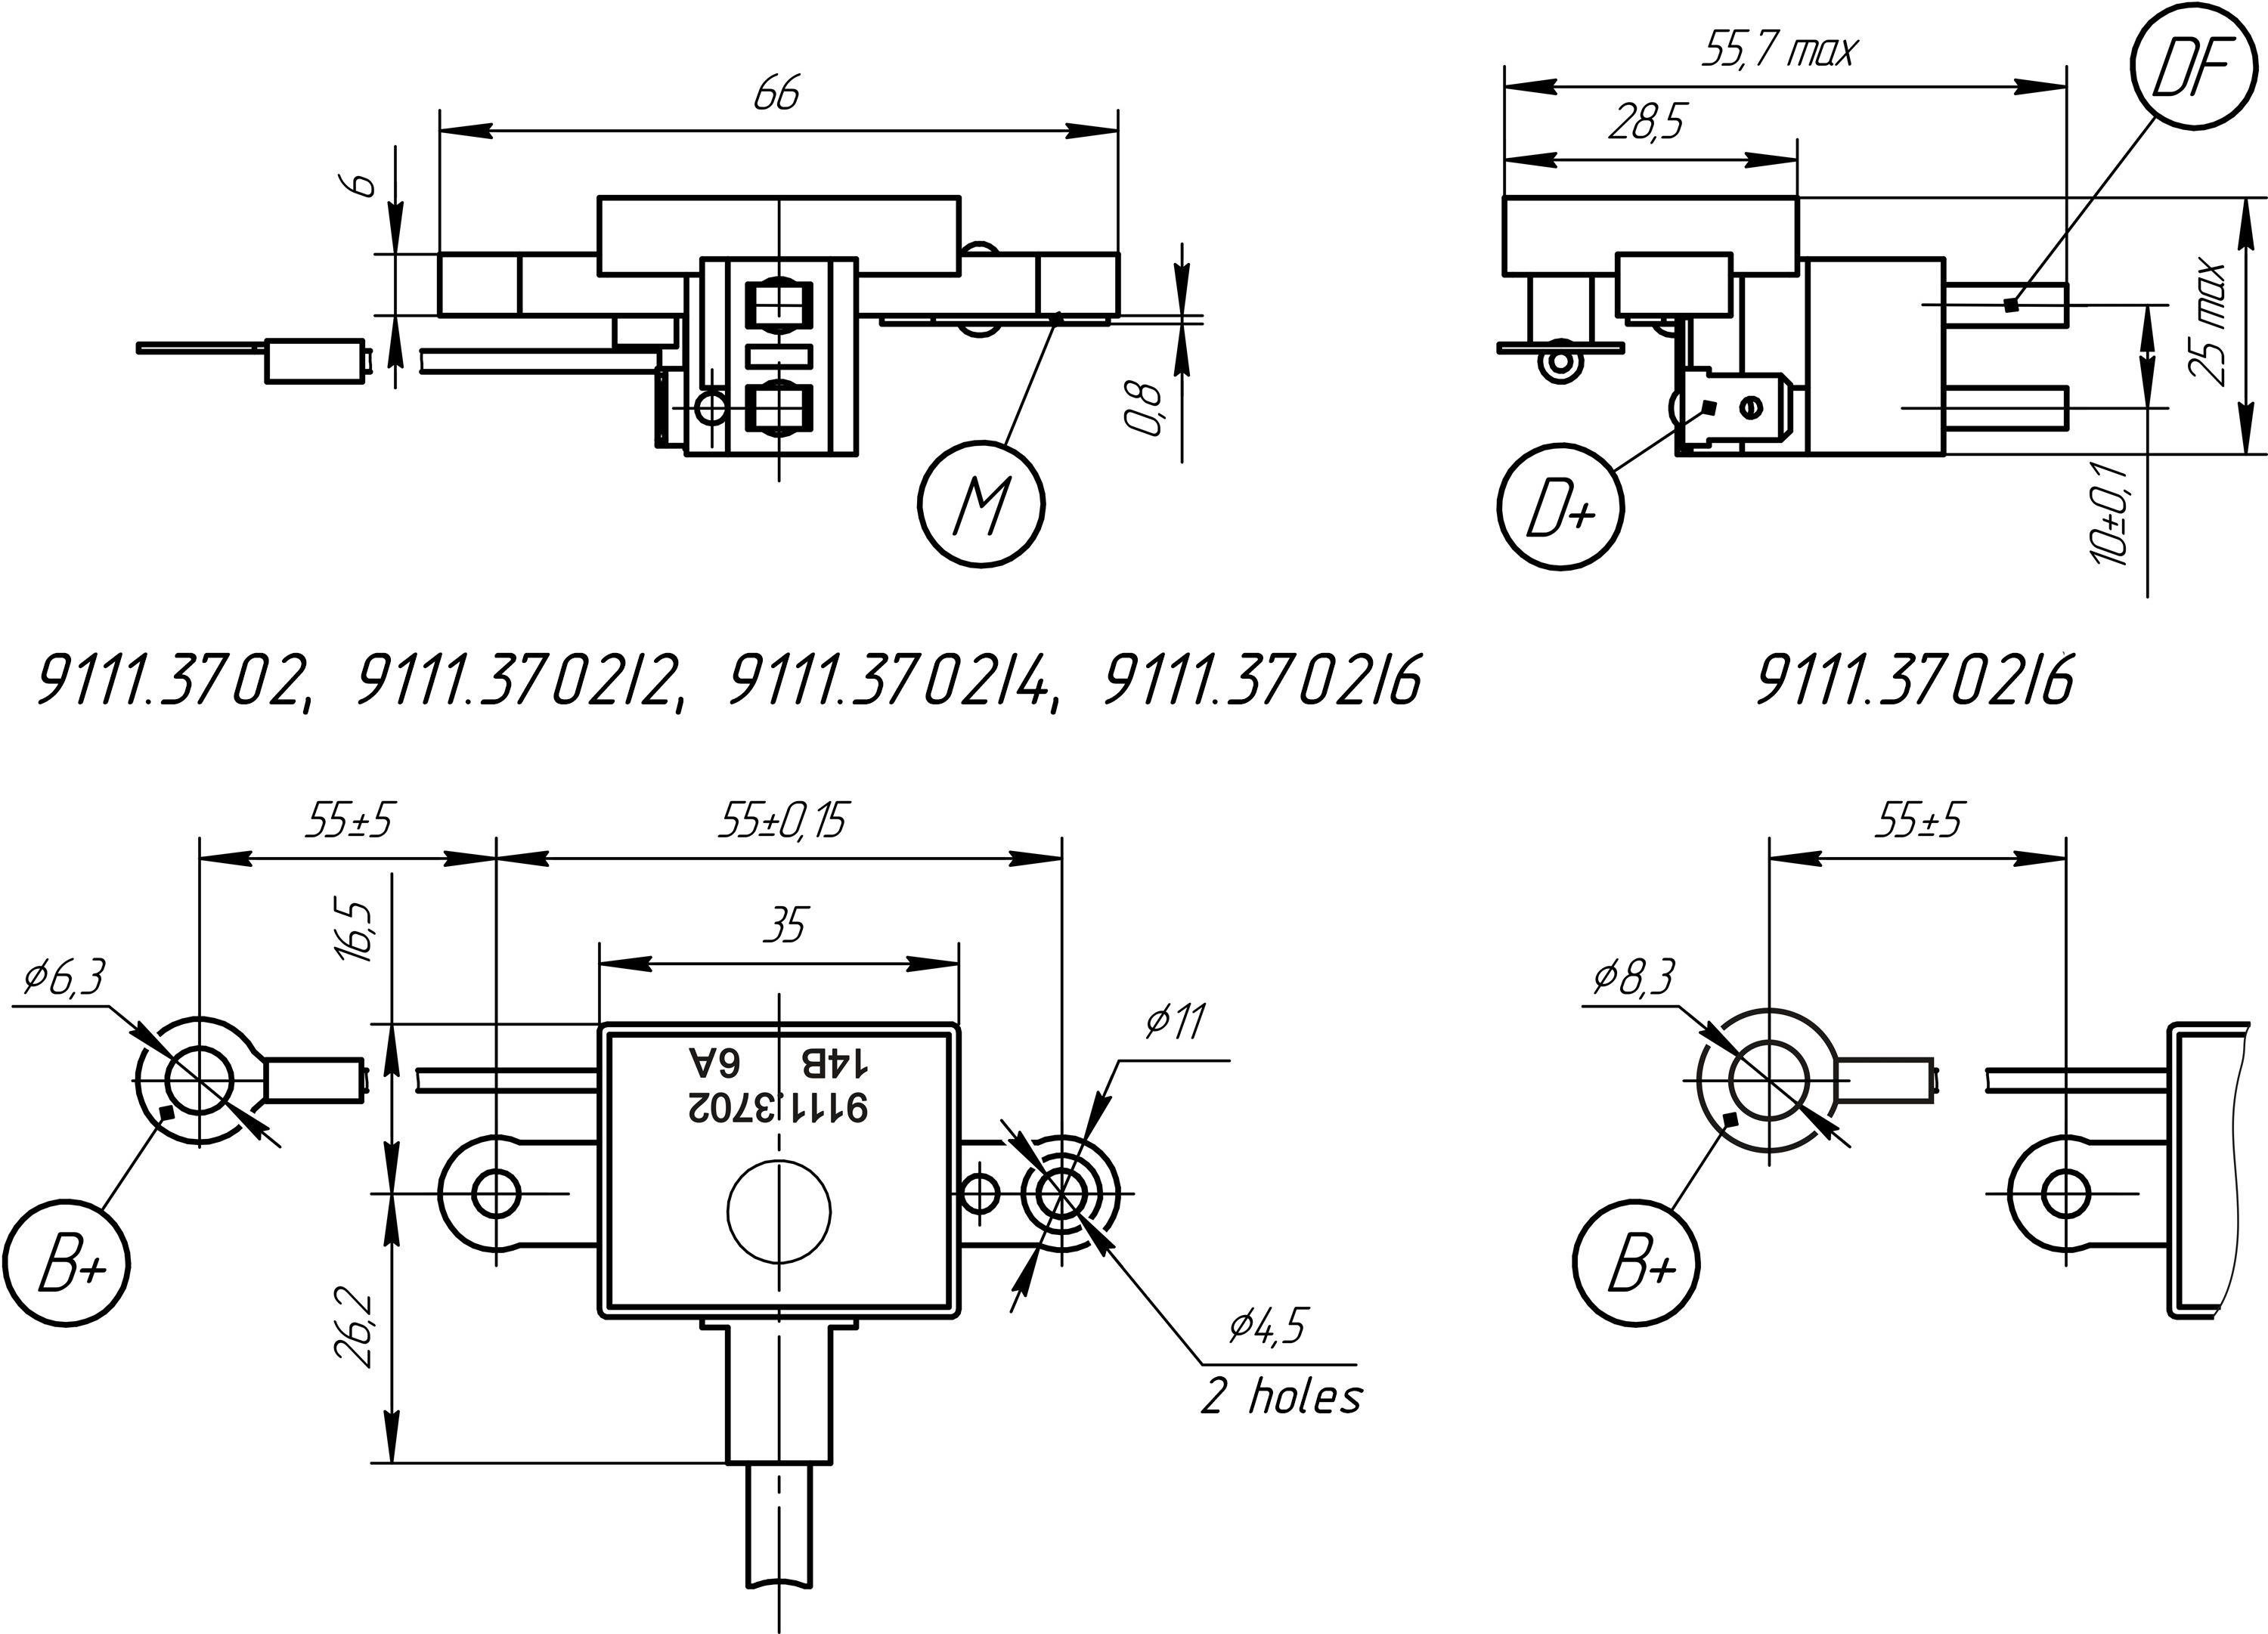 Dimensional drawing of the voltage regulators 9111.3702, 9111.3702I2, 9111.3702I4, 9111.3702I6